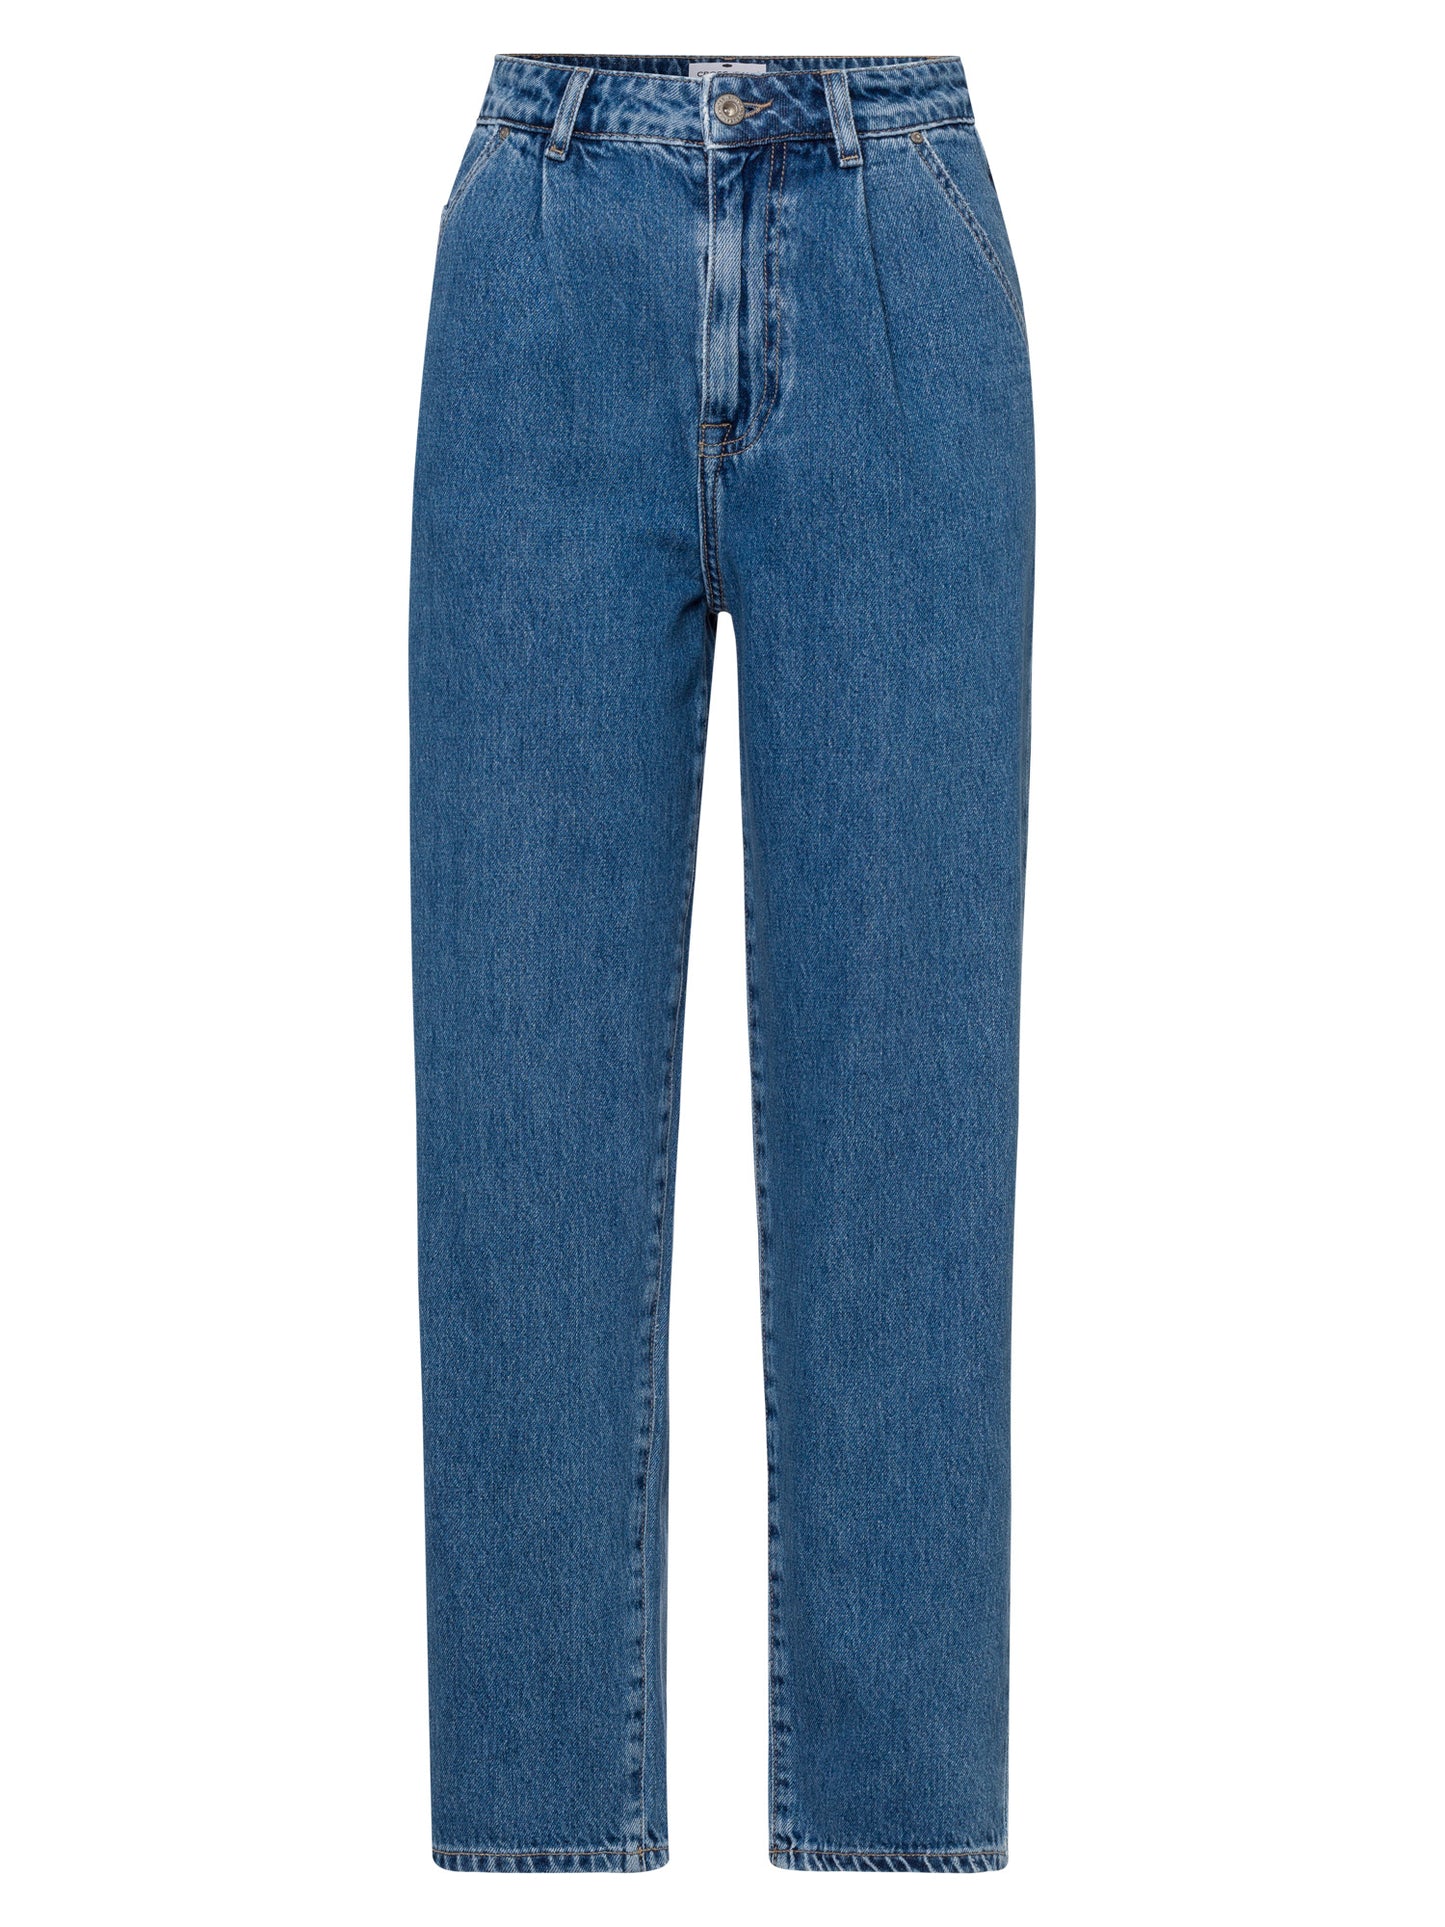 Women's jeans loose fit high waist blue